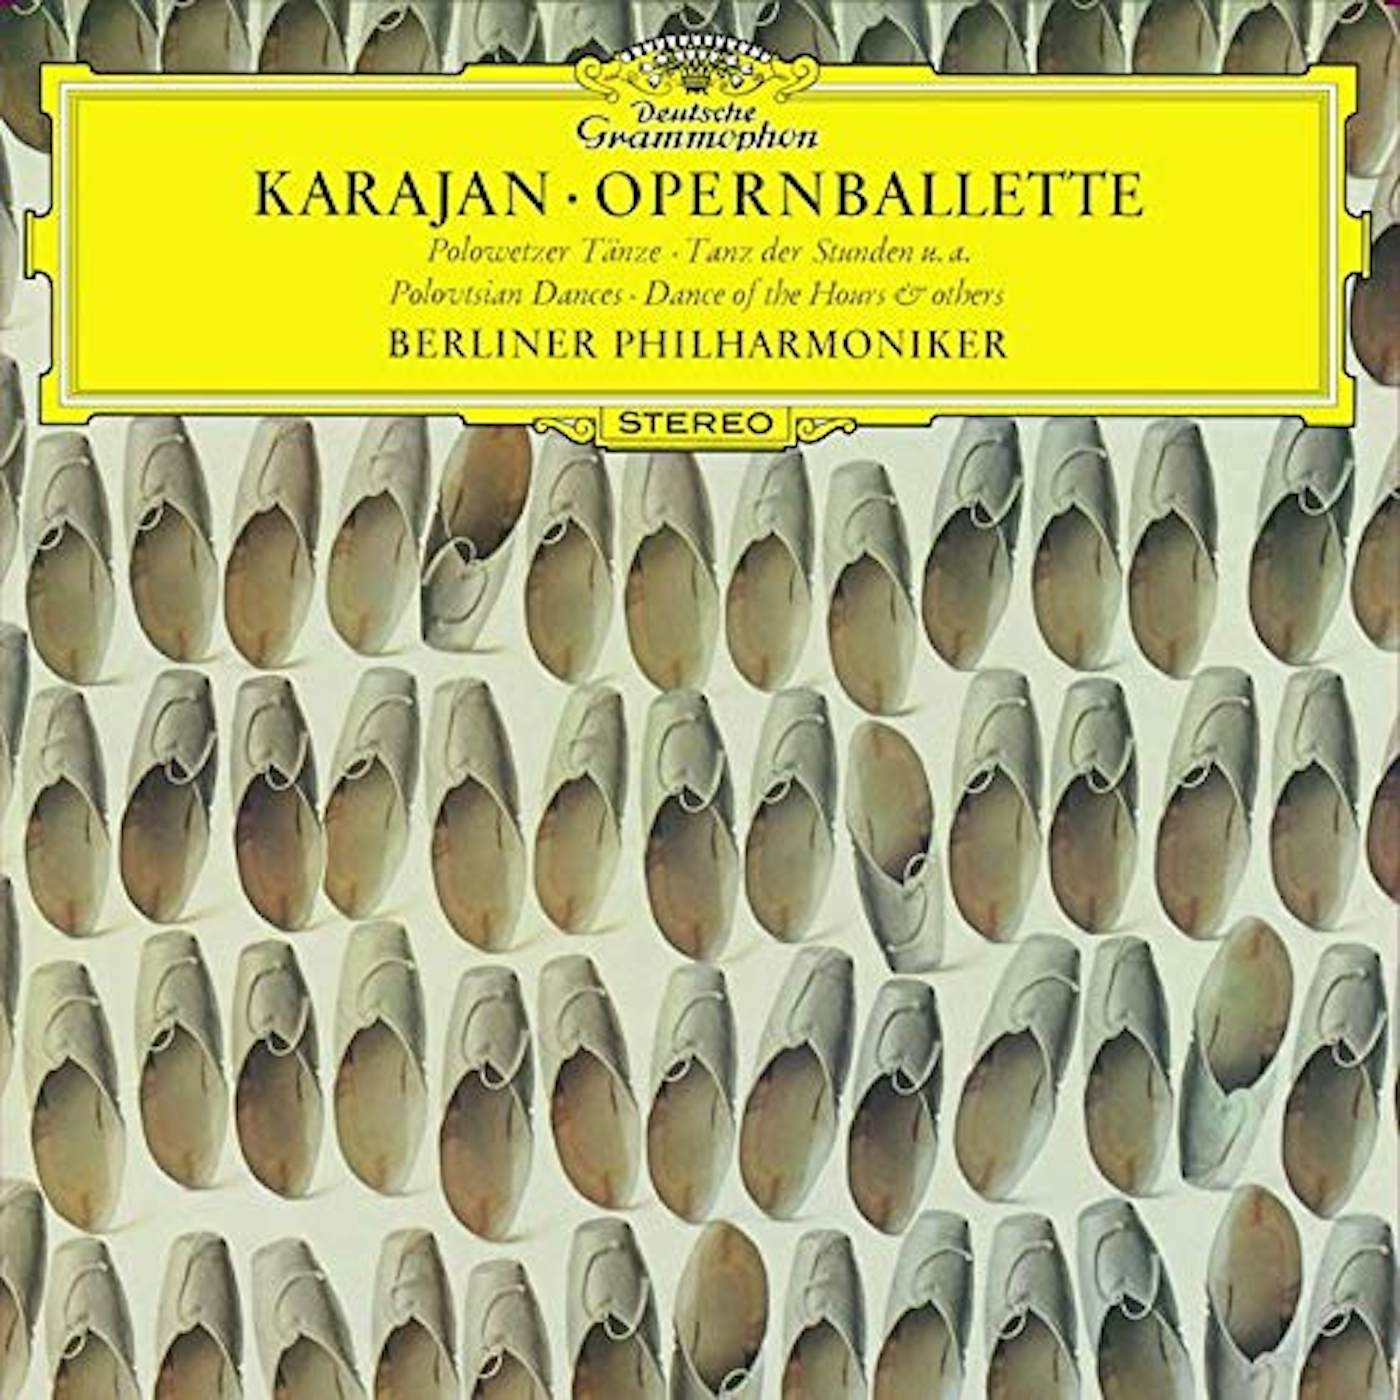 Herbert von Karajan OPERNBALLETTE CD Super Audio CD